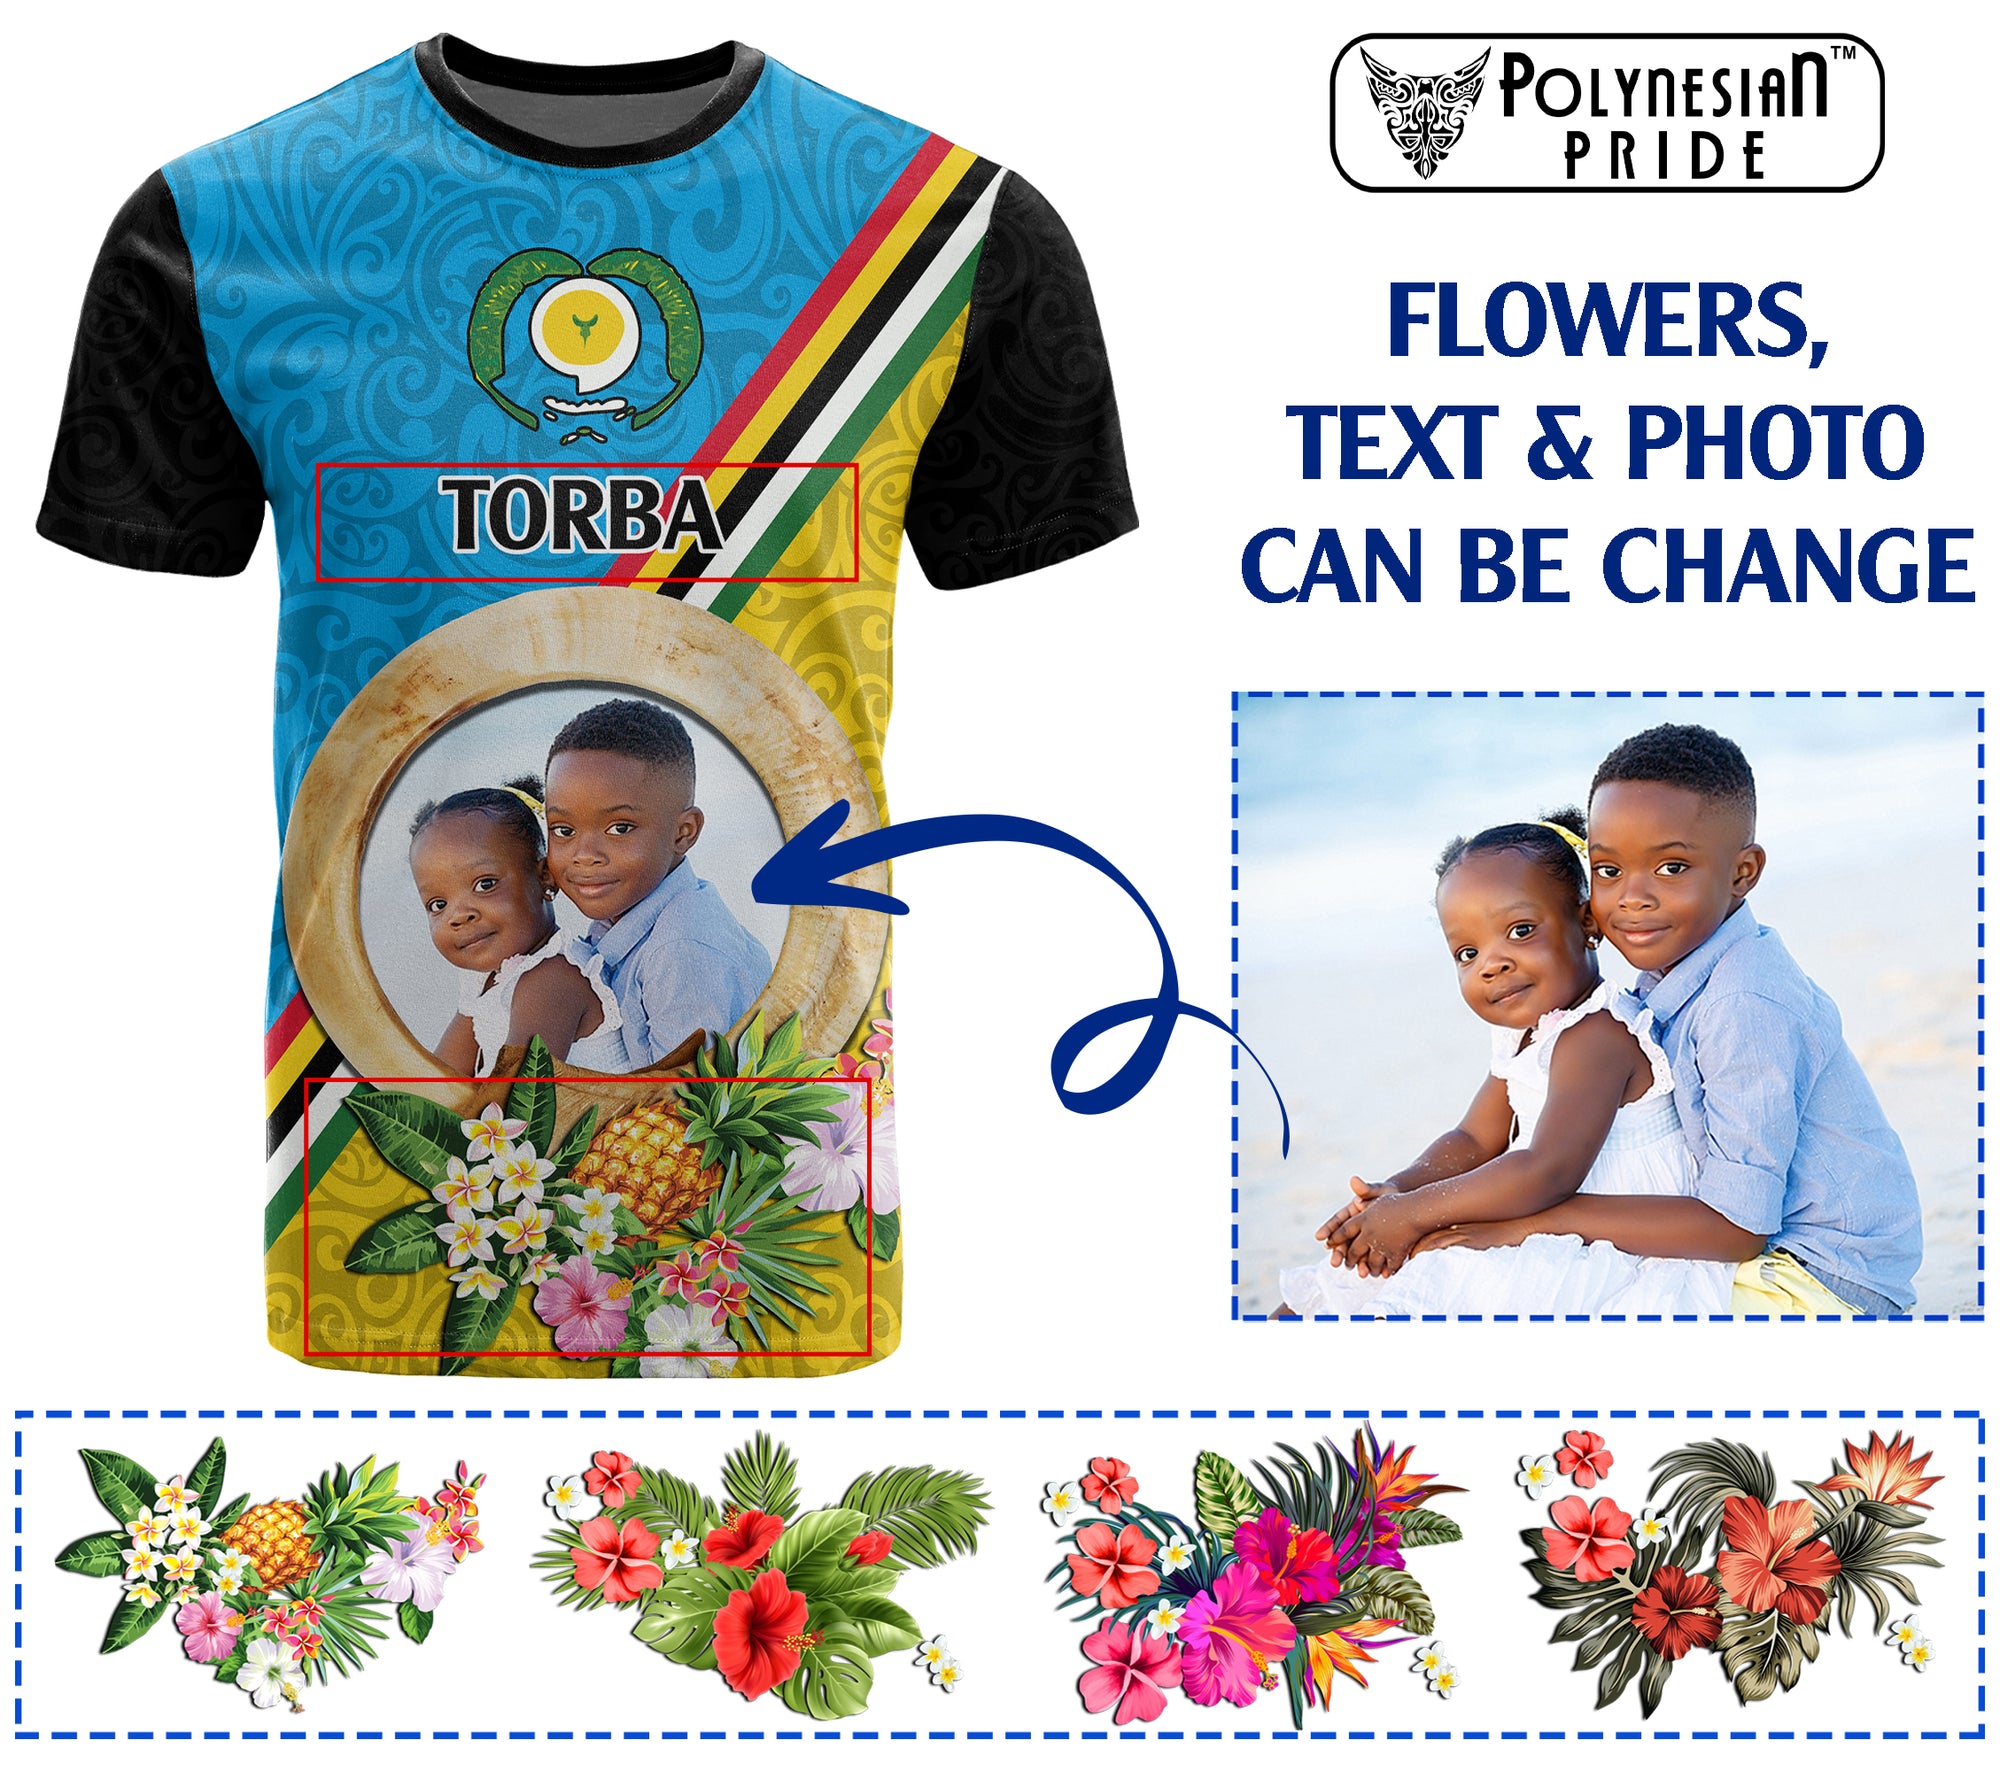 Torba Province Custom T Shirt With Photo Vanuatuan Boar's Tusk Flag Multicolored CTM09 - Polynesian Pride